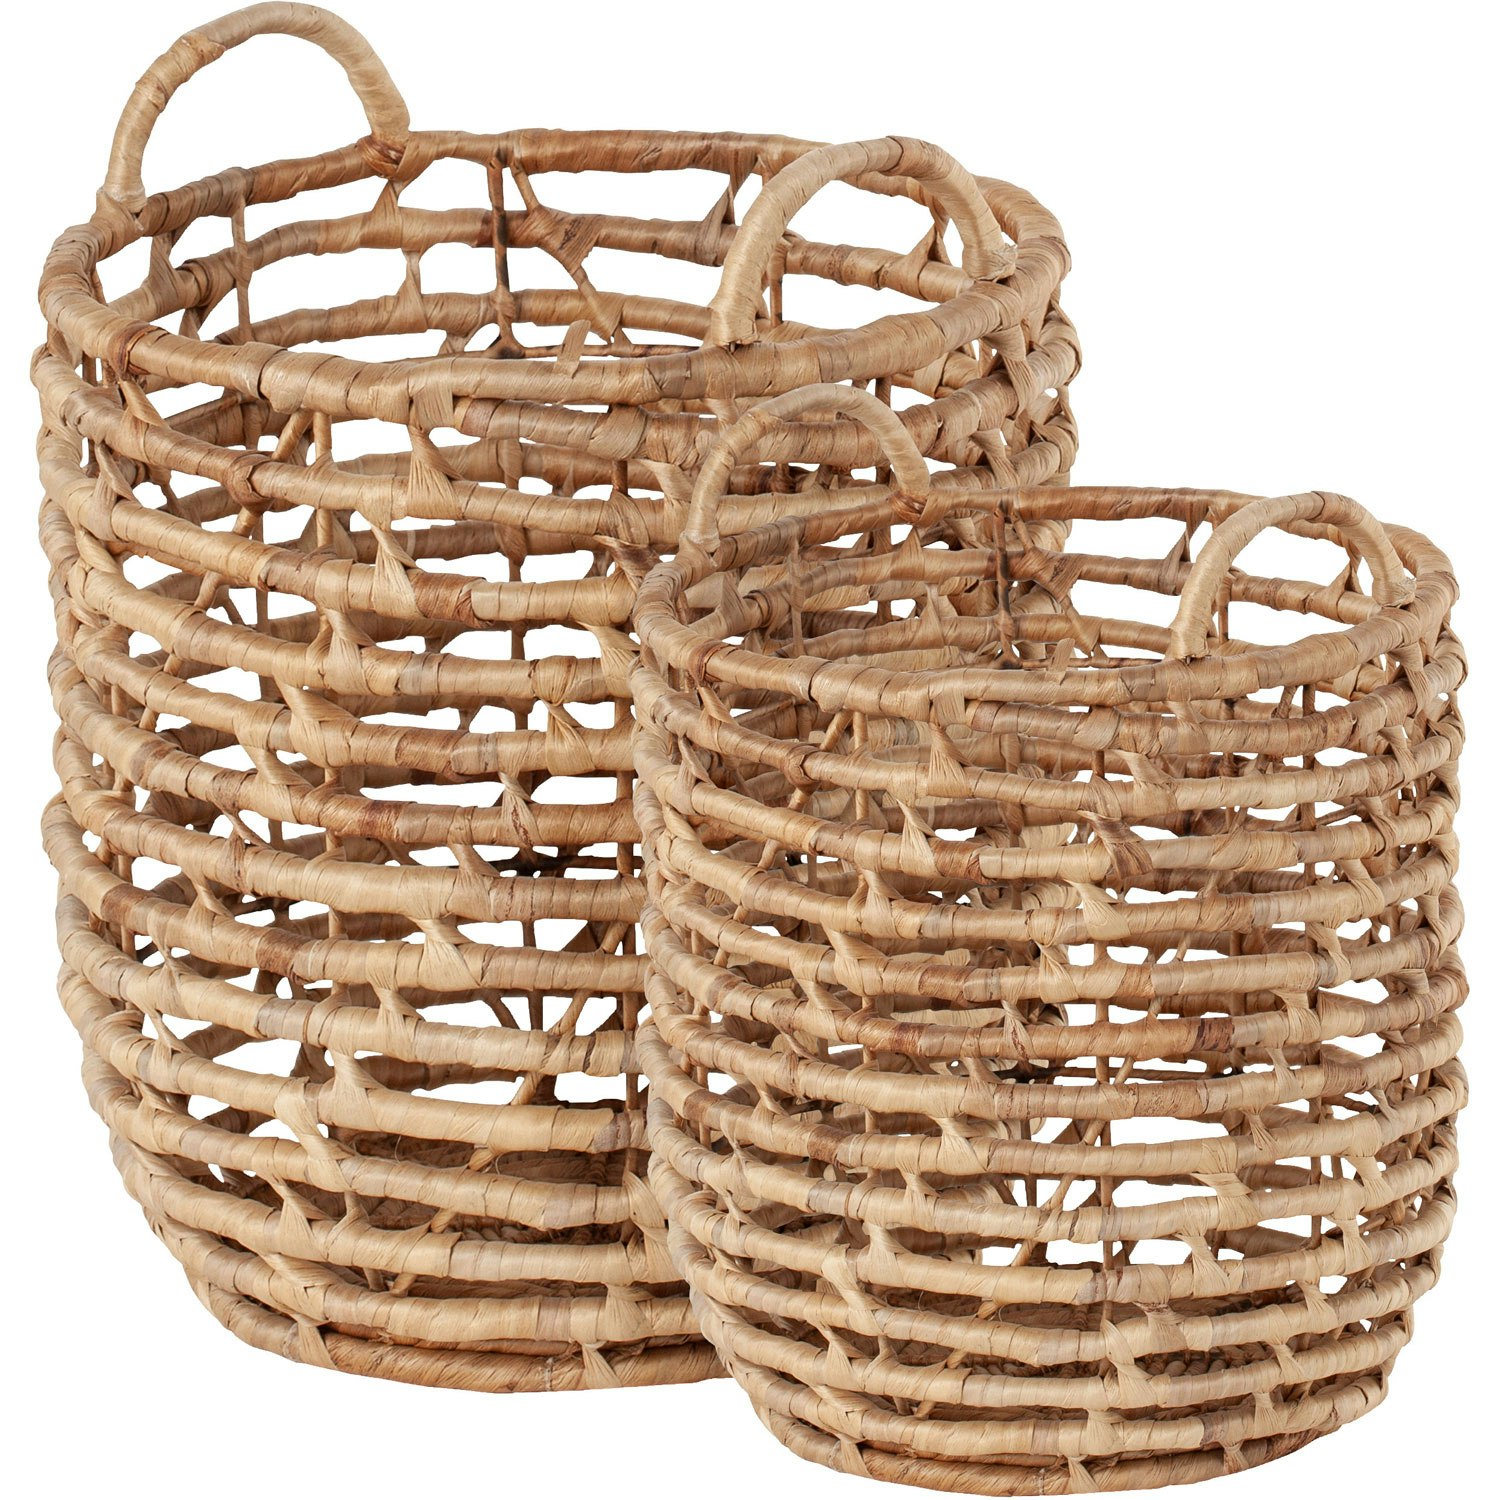 https://royaldesign.com/image/2/dixie-basket-u-shape-open-twist-lily-s-2-0